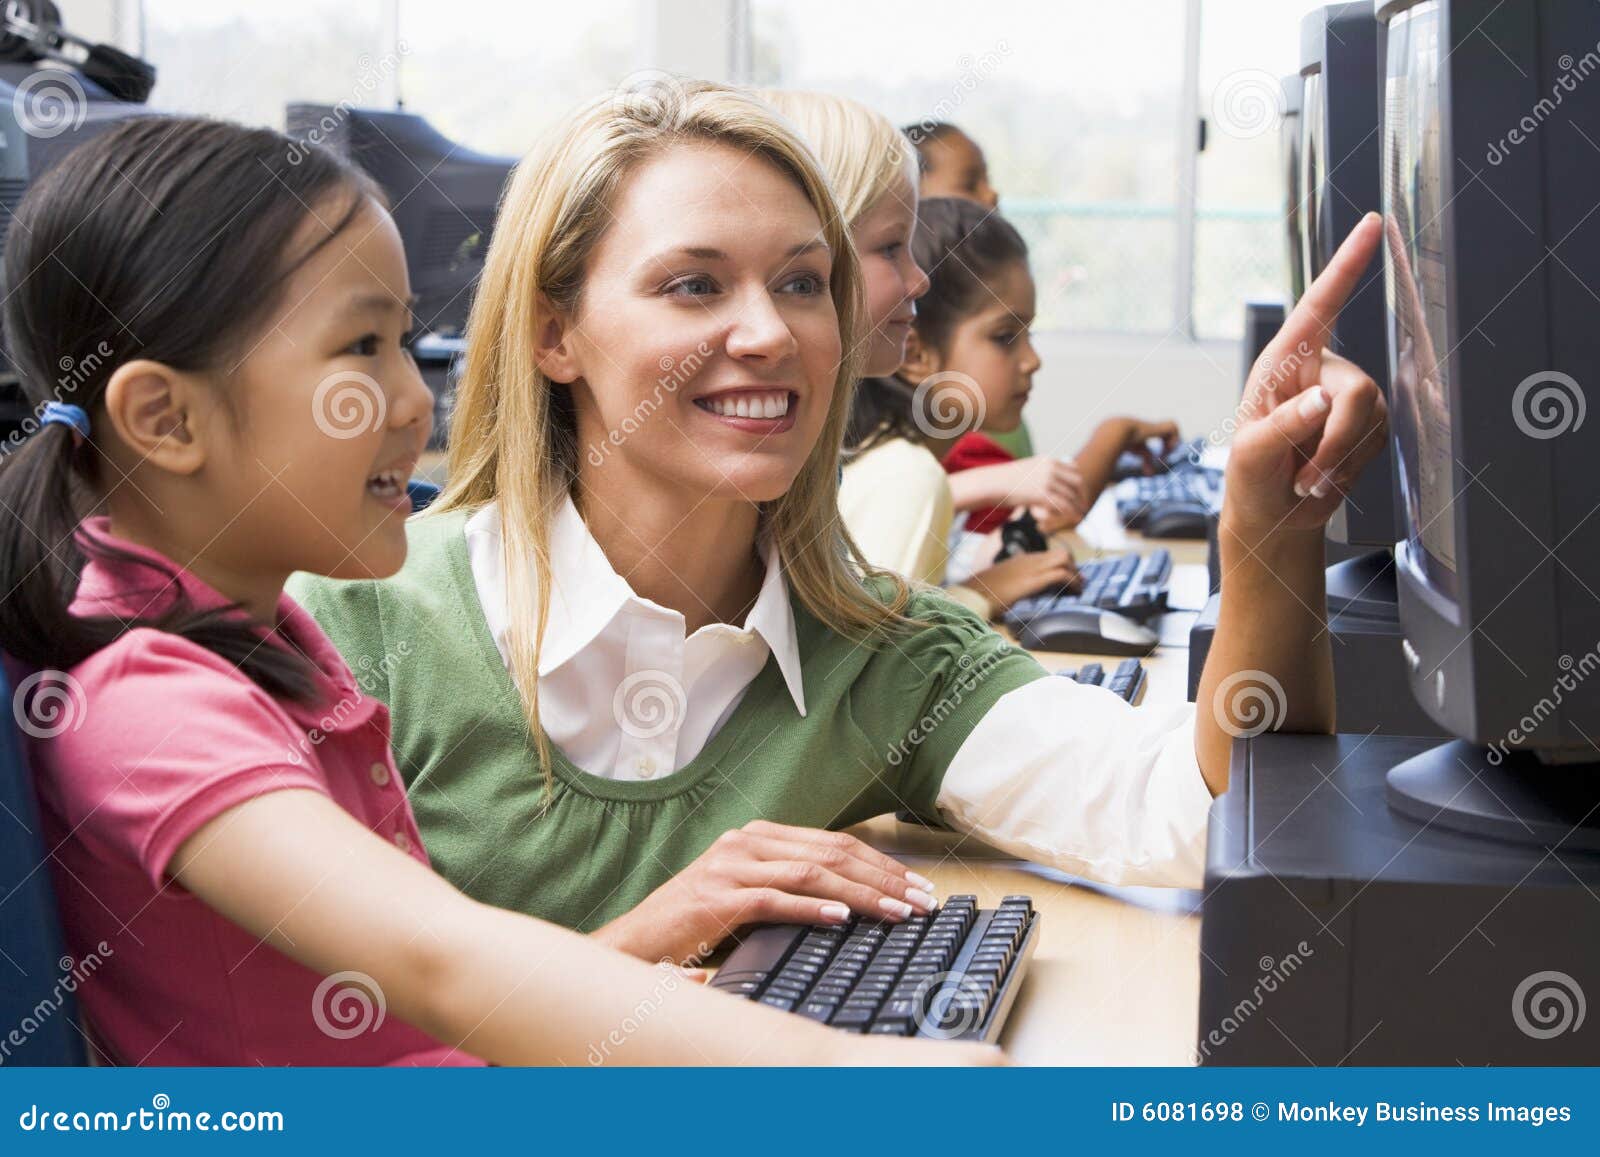 Kindergarten Children Learn To Use Computers Stock Photo